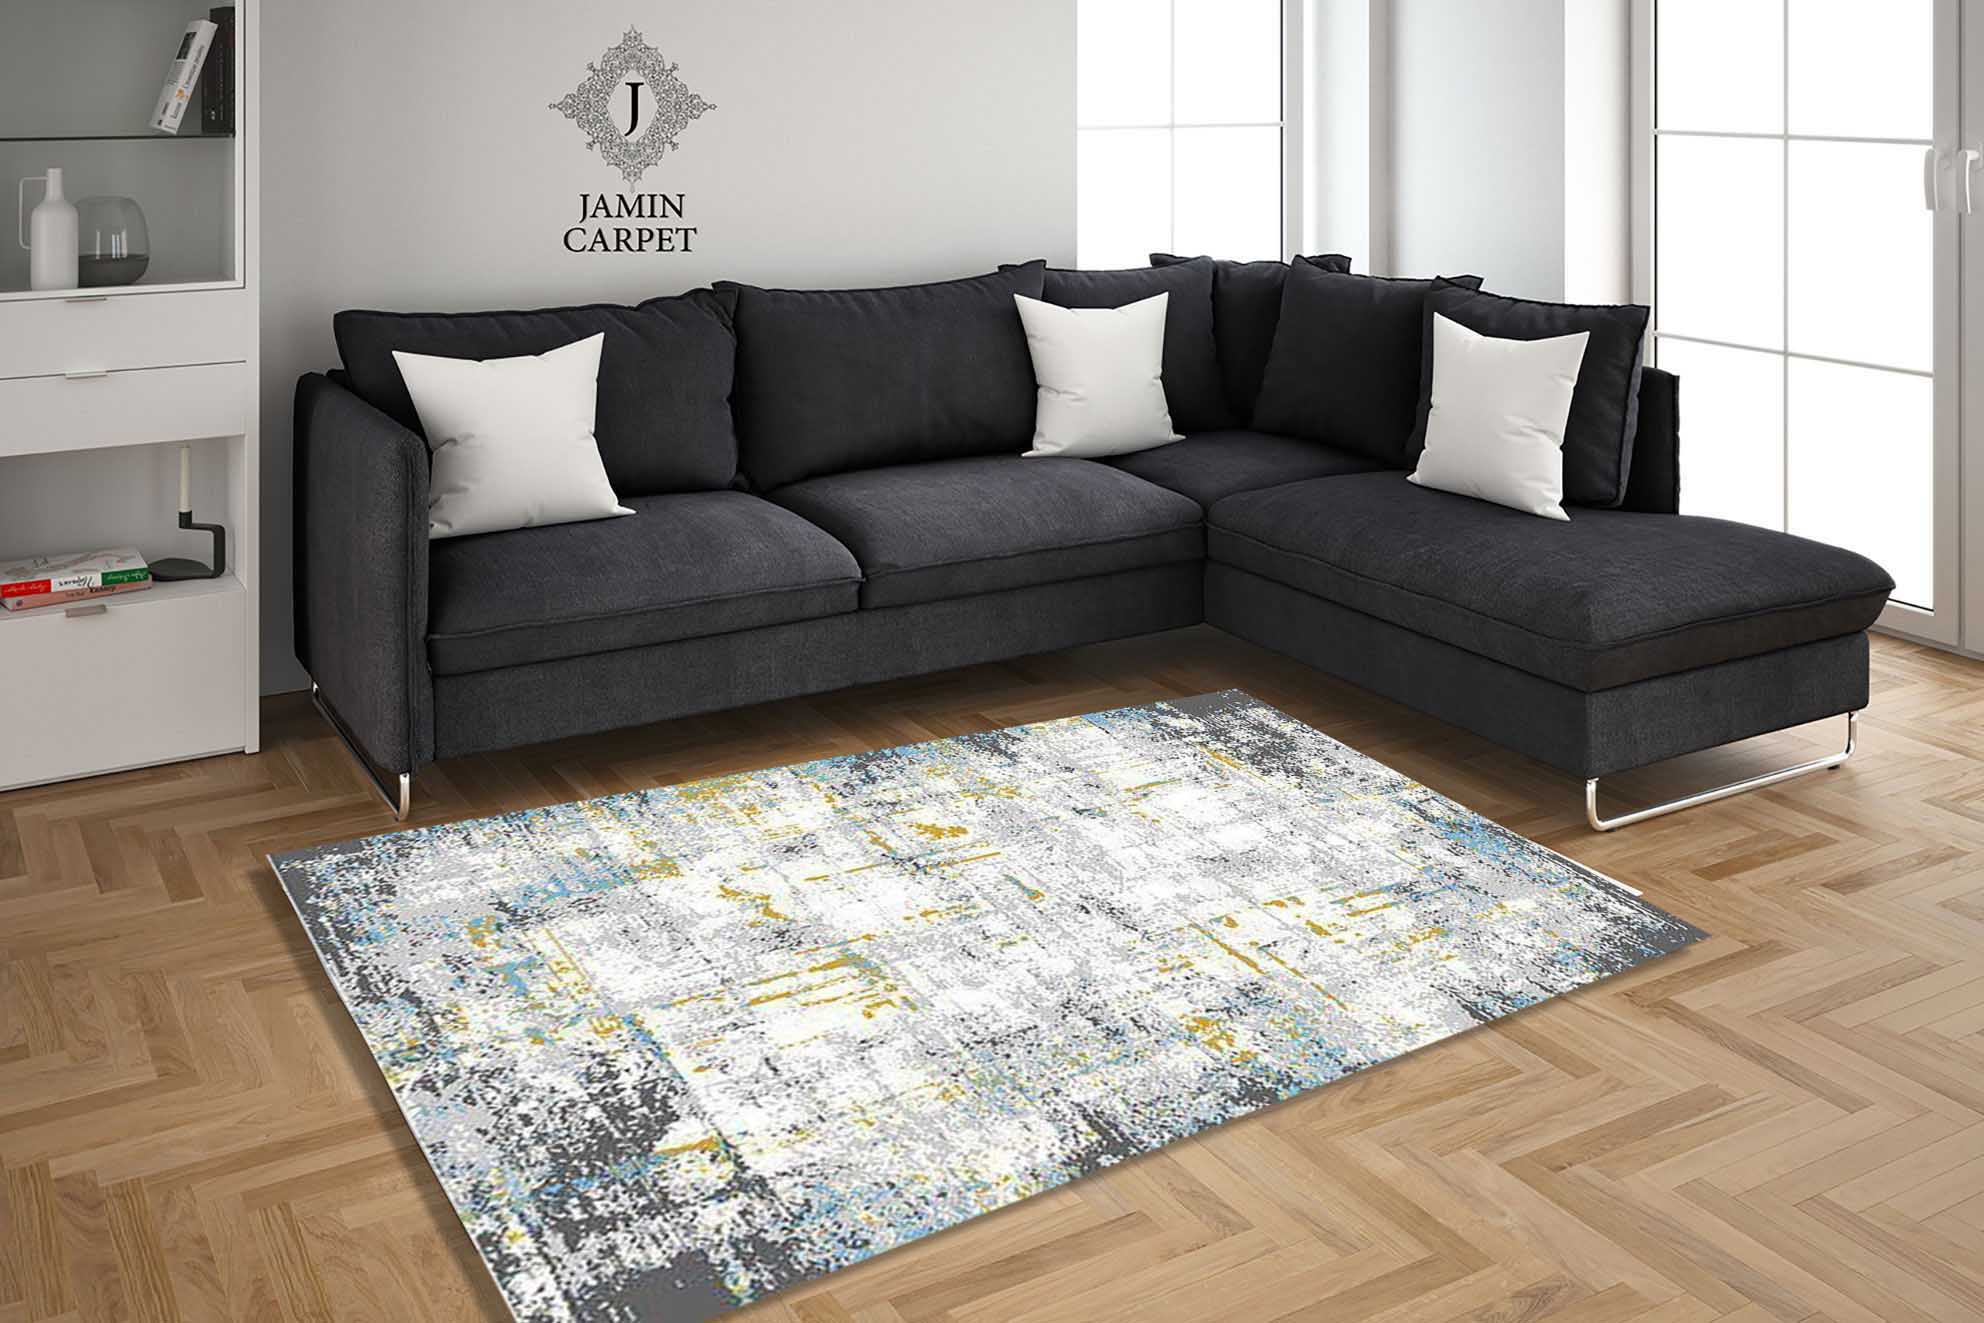 Fantasy carpet, code 279, comb 400, density 1800, all acrylic